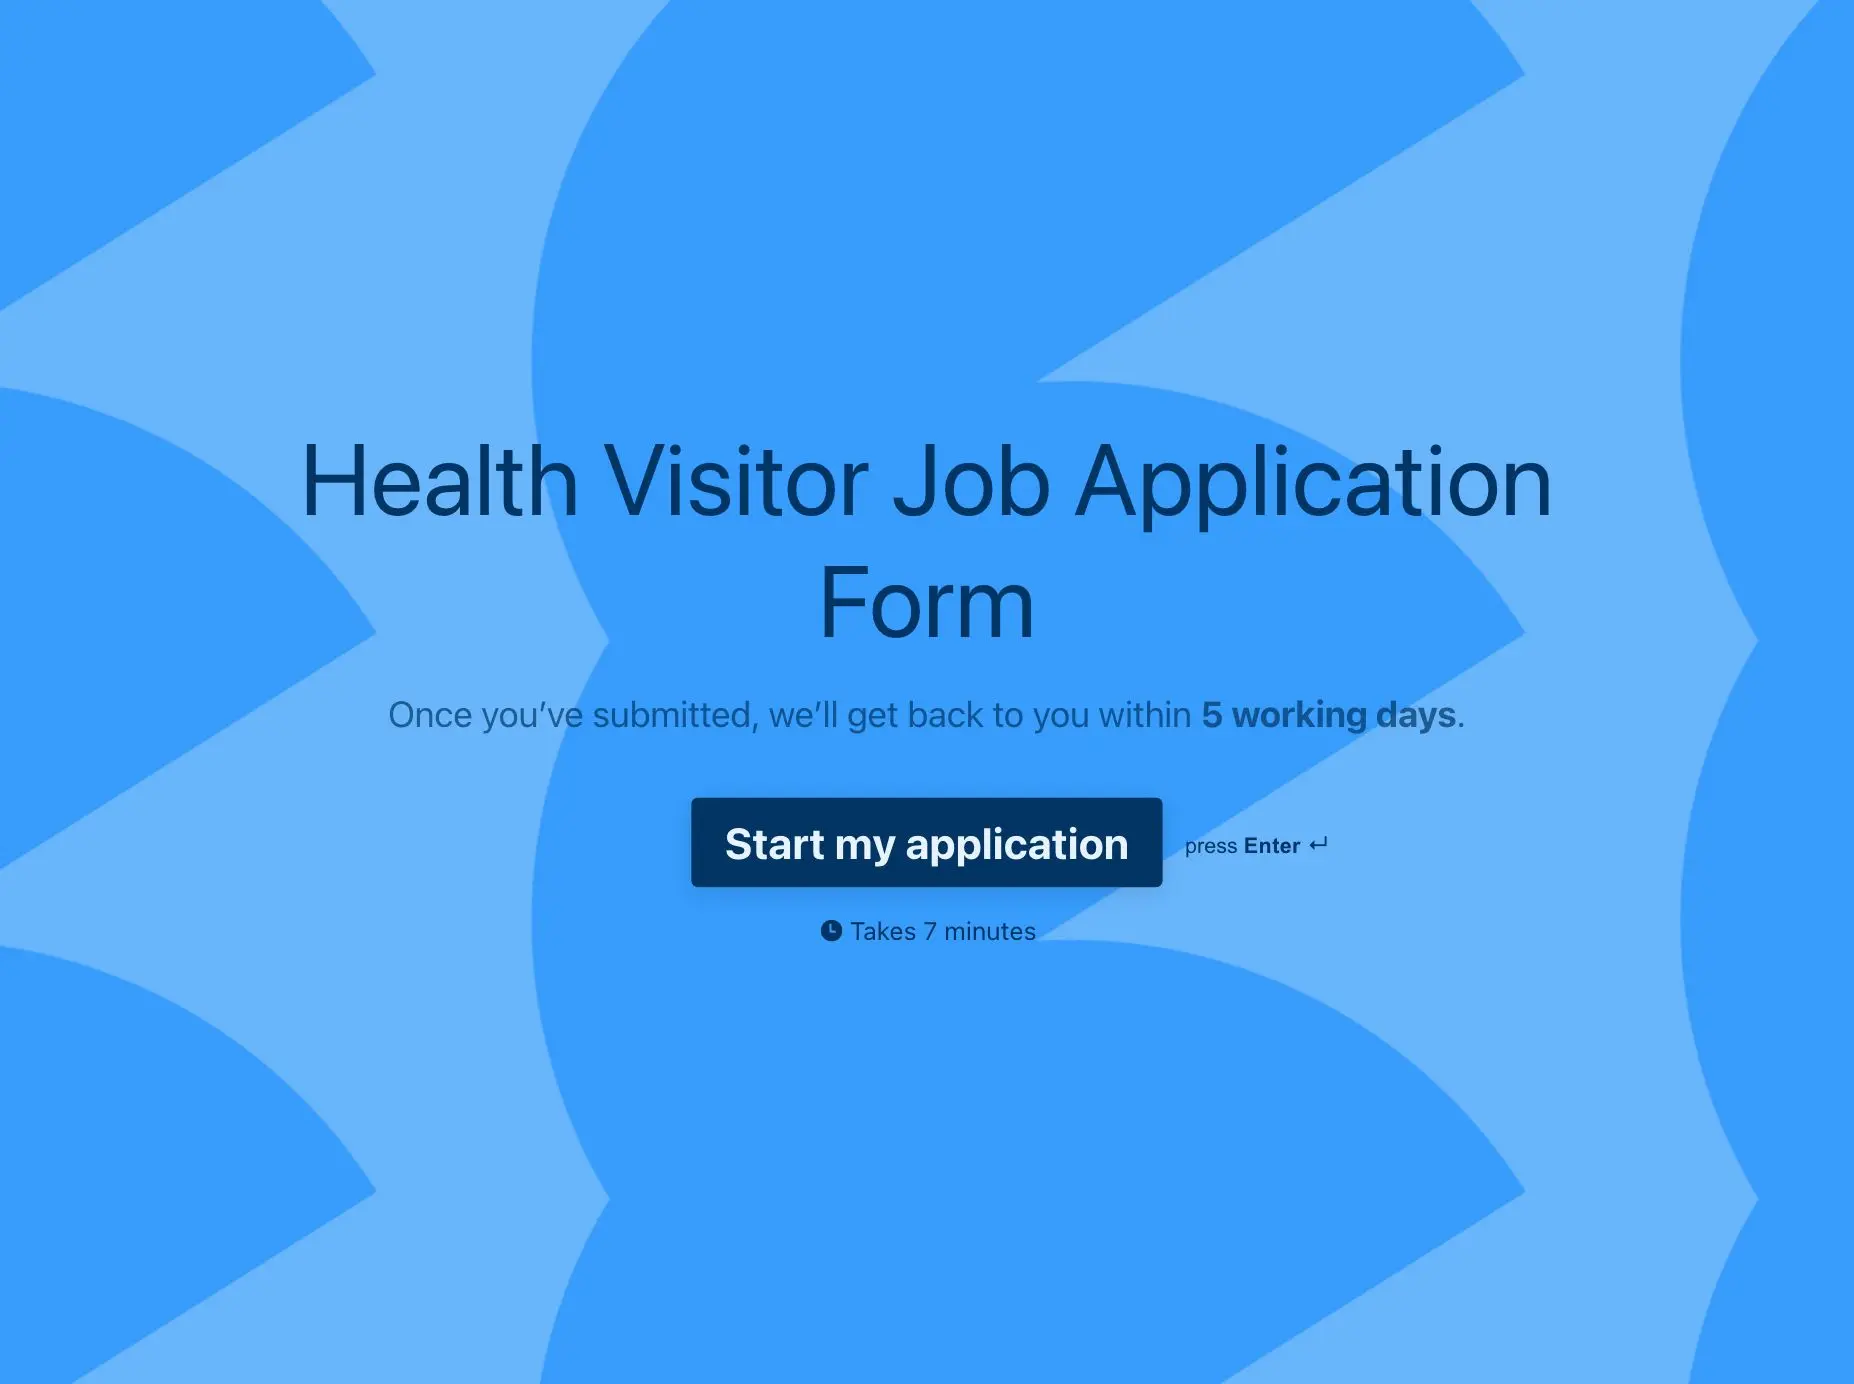 Health Visitor Job Application Form Template Hero